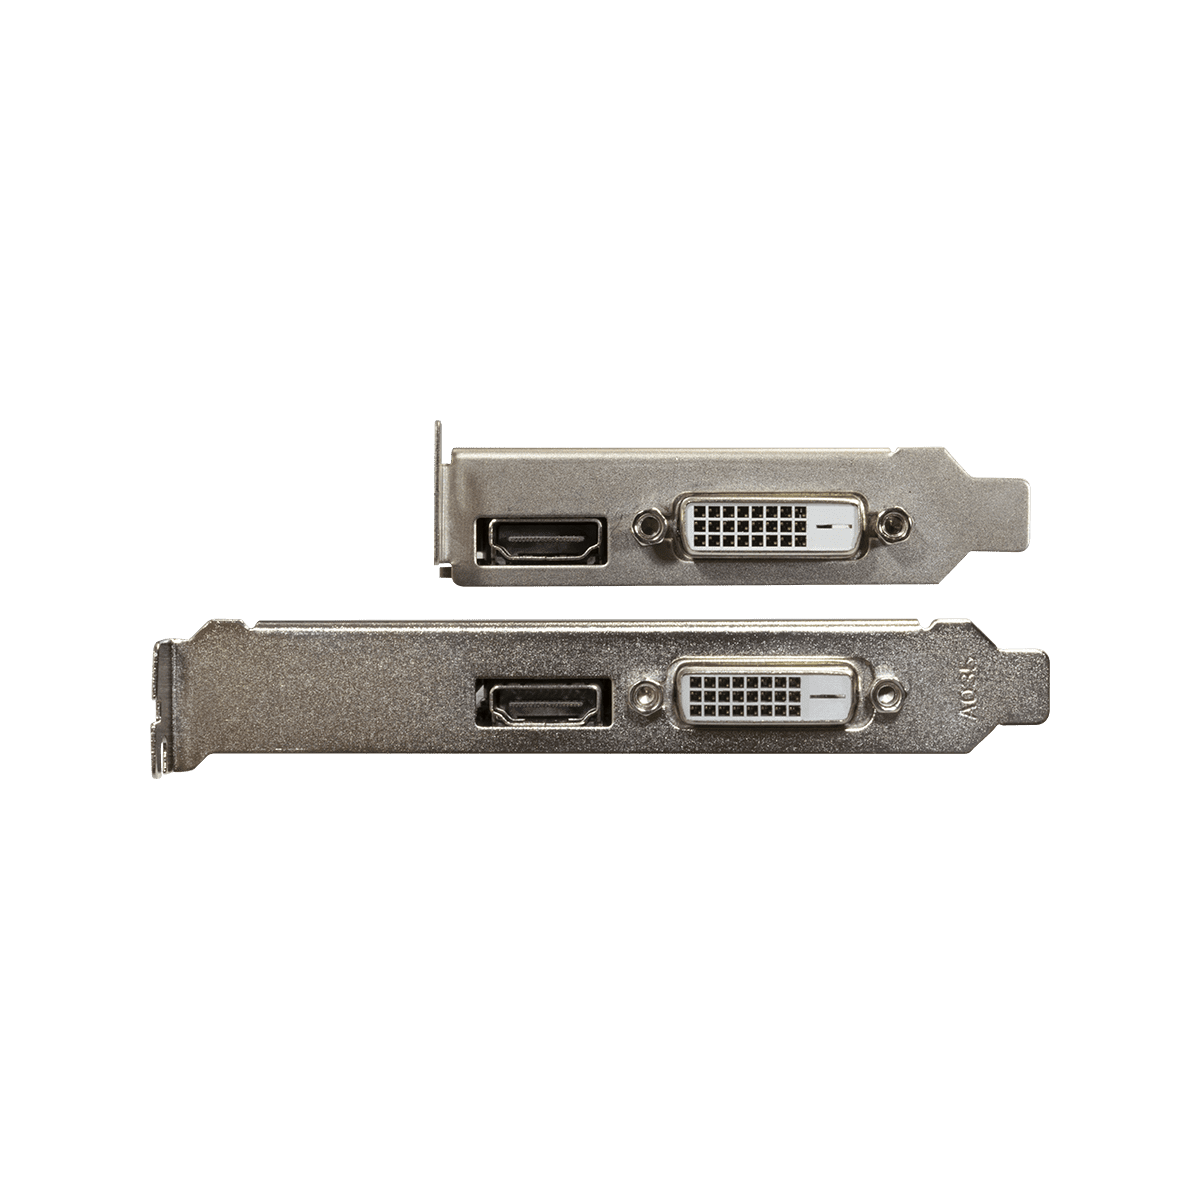 RD-RX550-E2GB/LP | Radeon RX 550 搭載 グラフィックボード (PCI ...